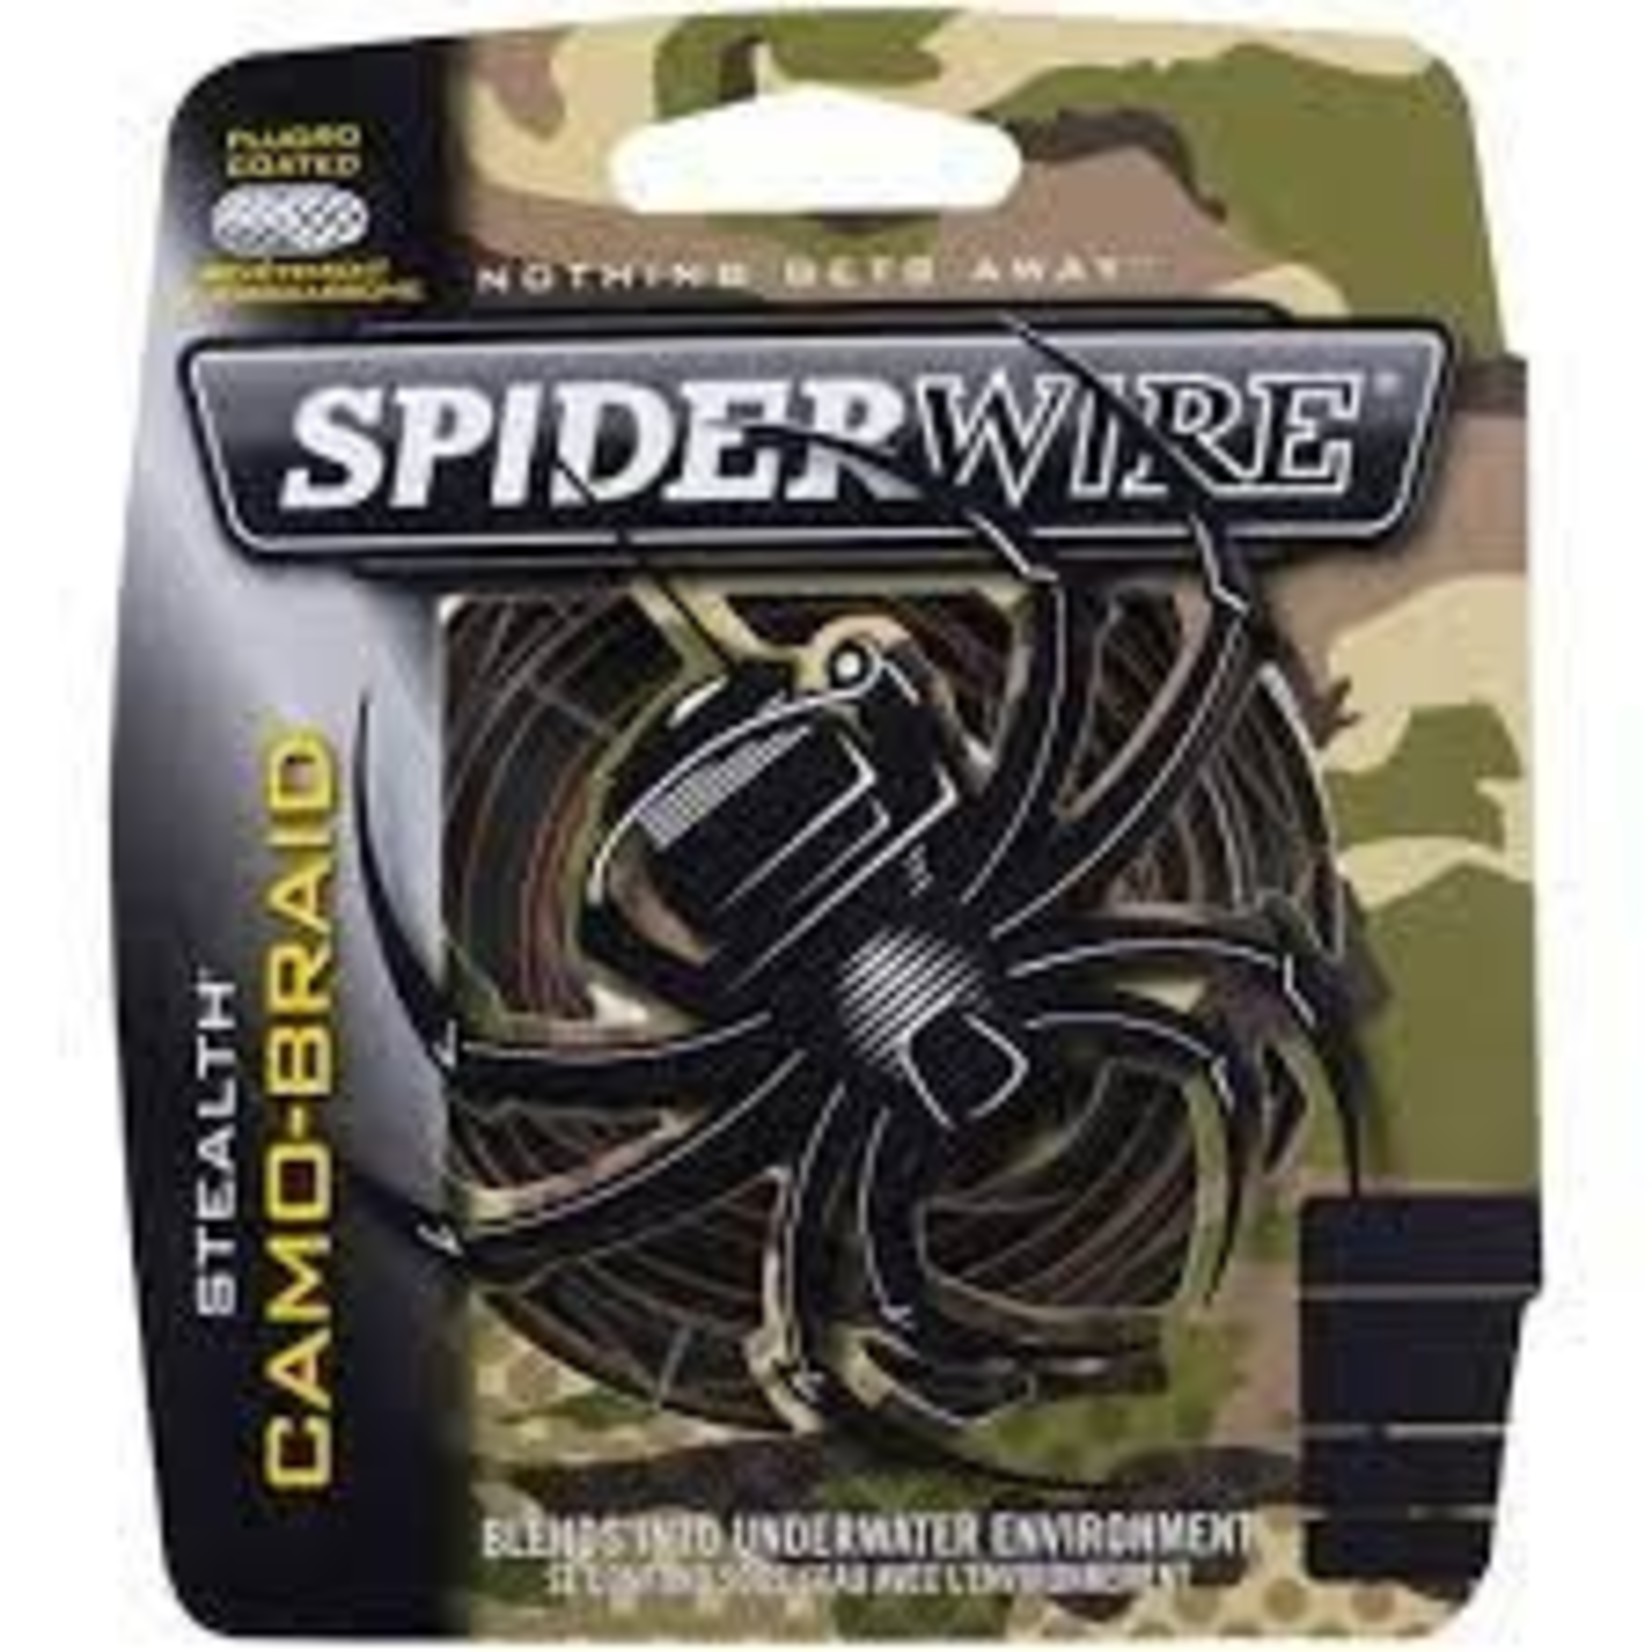 Spiderwire Spiderwire Braided Fishing Line - 1/4 lb. Spools